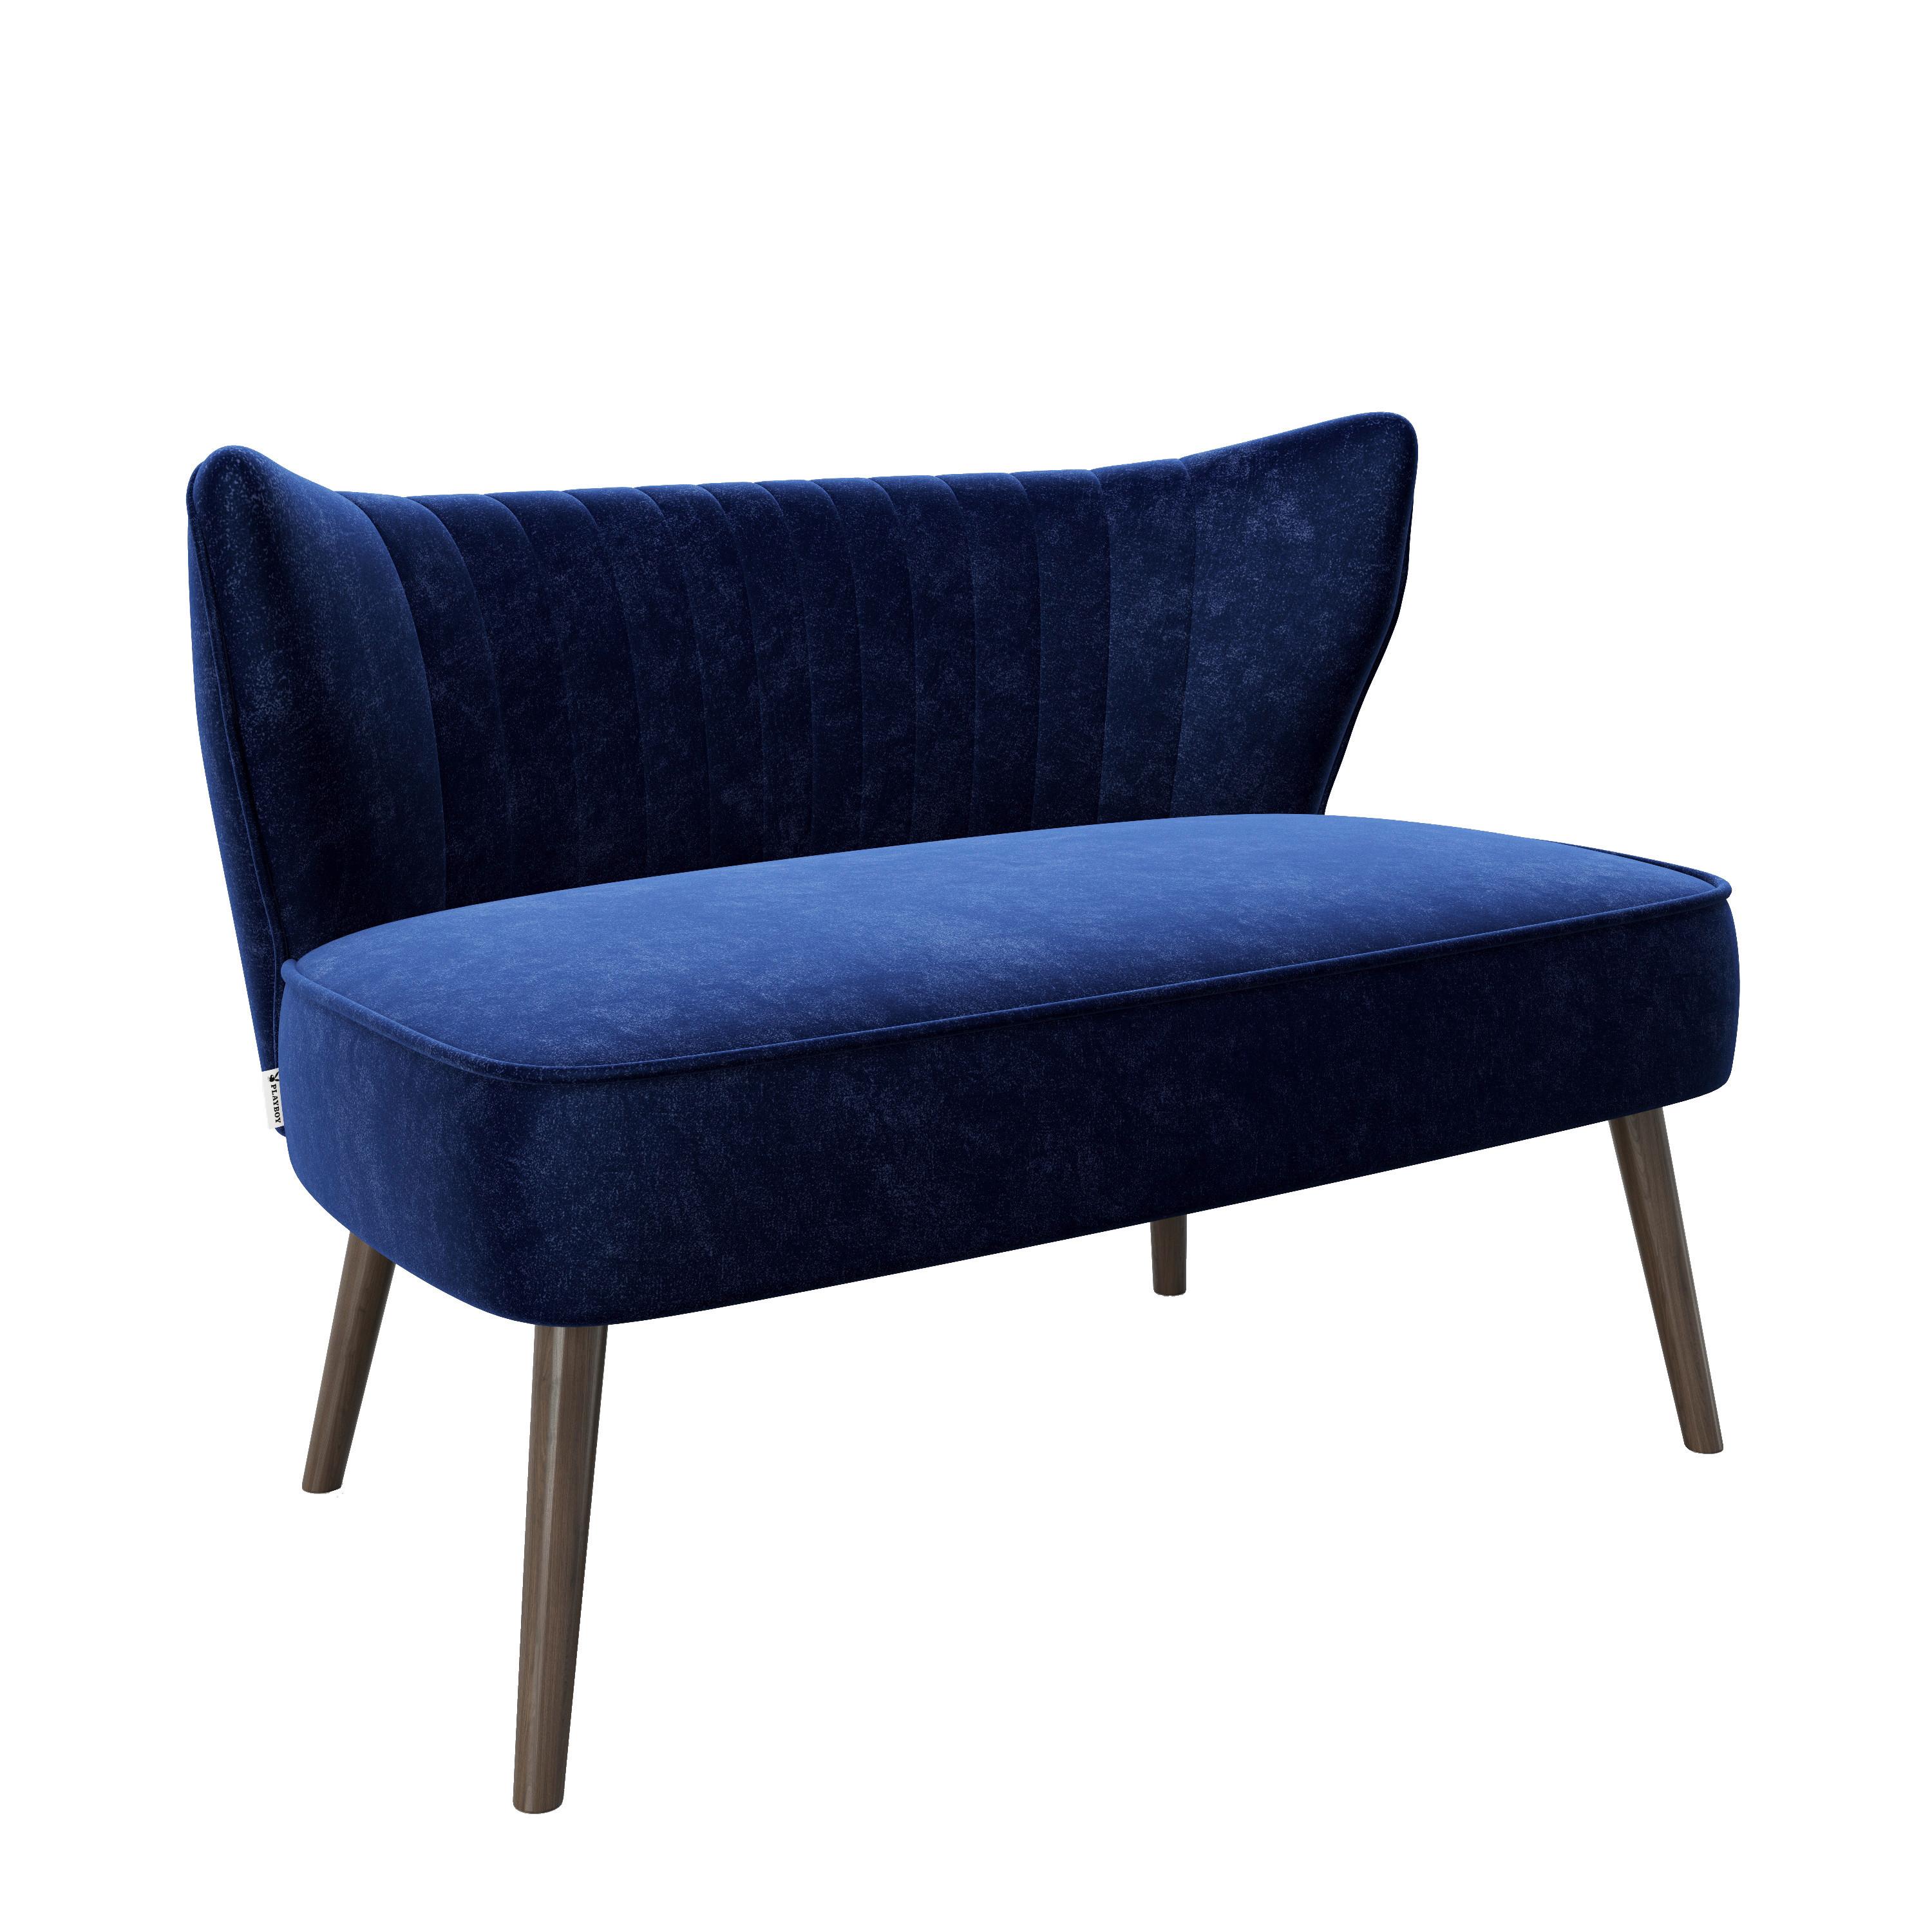 2-Sitzer-Sofa Kelly Blau Vintage-Style - Blau/Walnussfarben, KONVENTIONELL, Textil (112/76/73cm) - Playboy